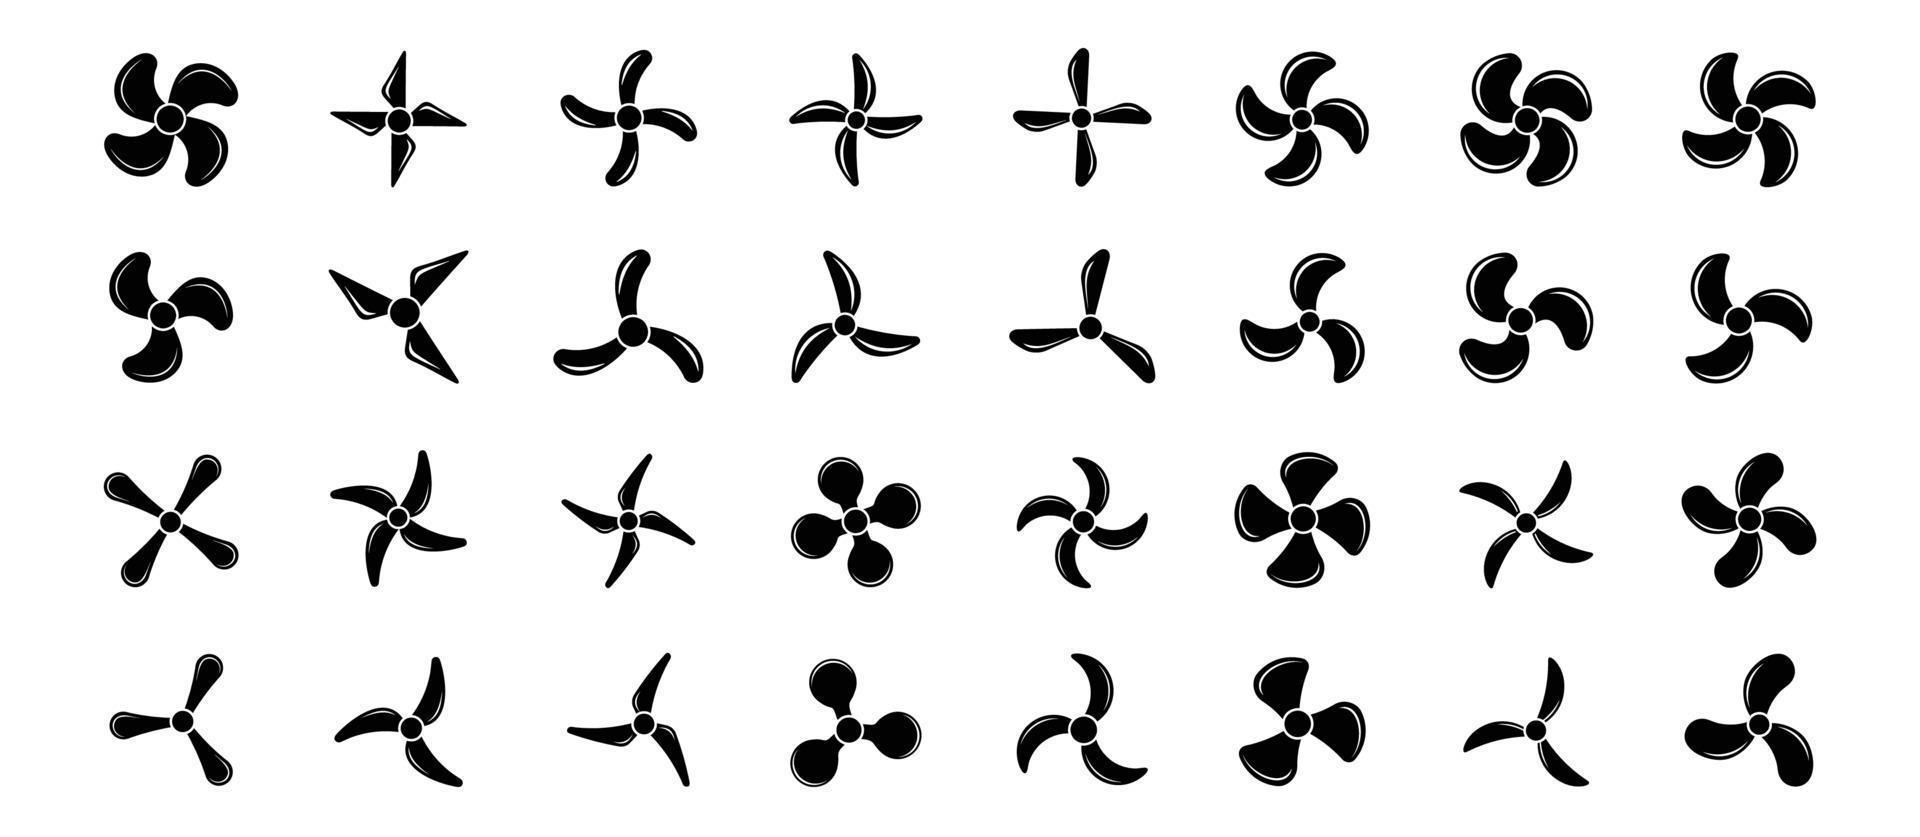 Flugzeug-Propeller-Symbole, Symbole Lüfter rotierende Vektor-Illustration. Propeller-Icon-Set vektor